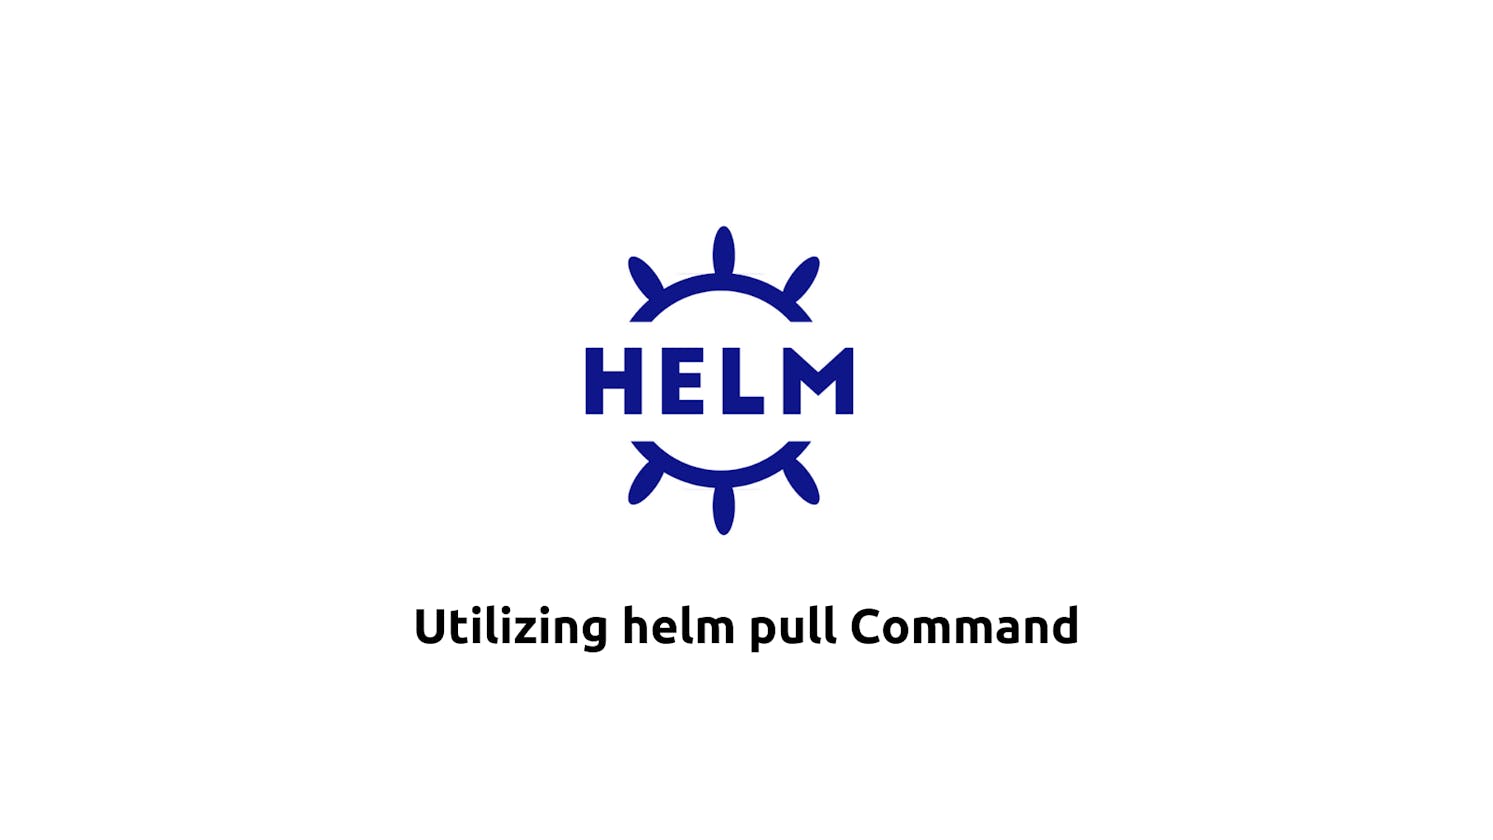 Utilizing helm pull Command